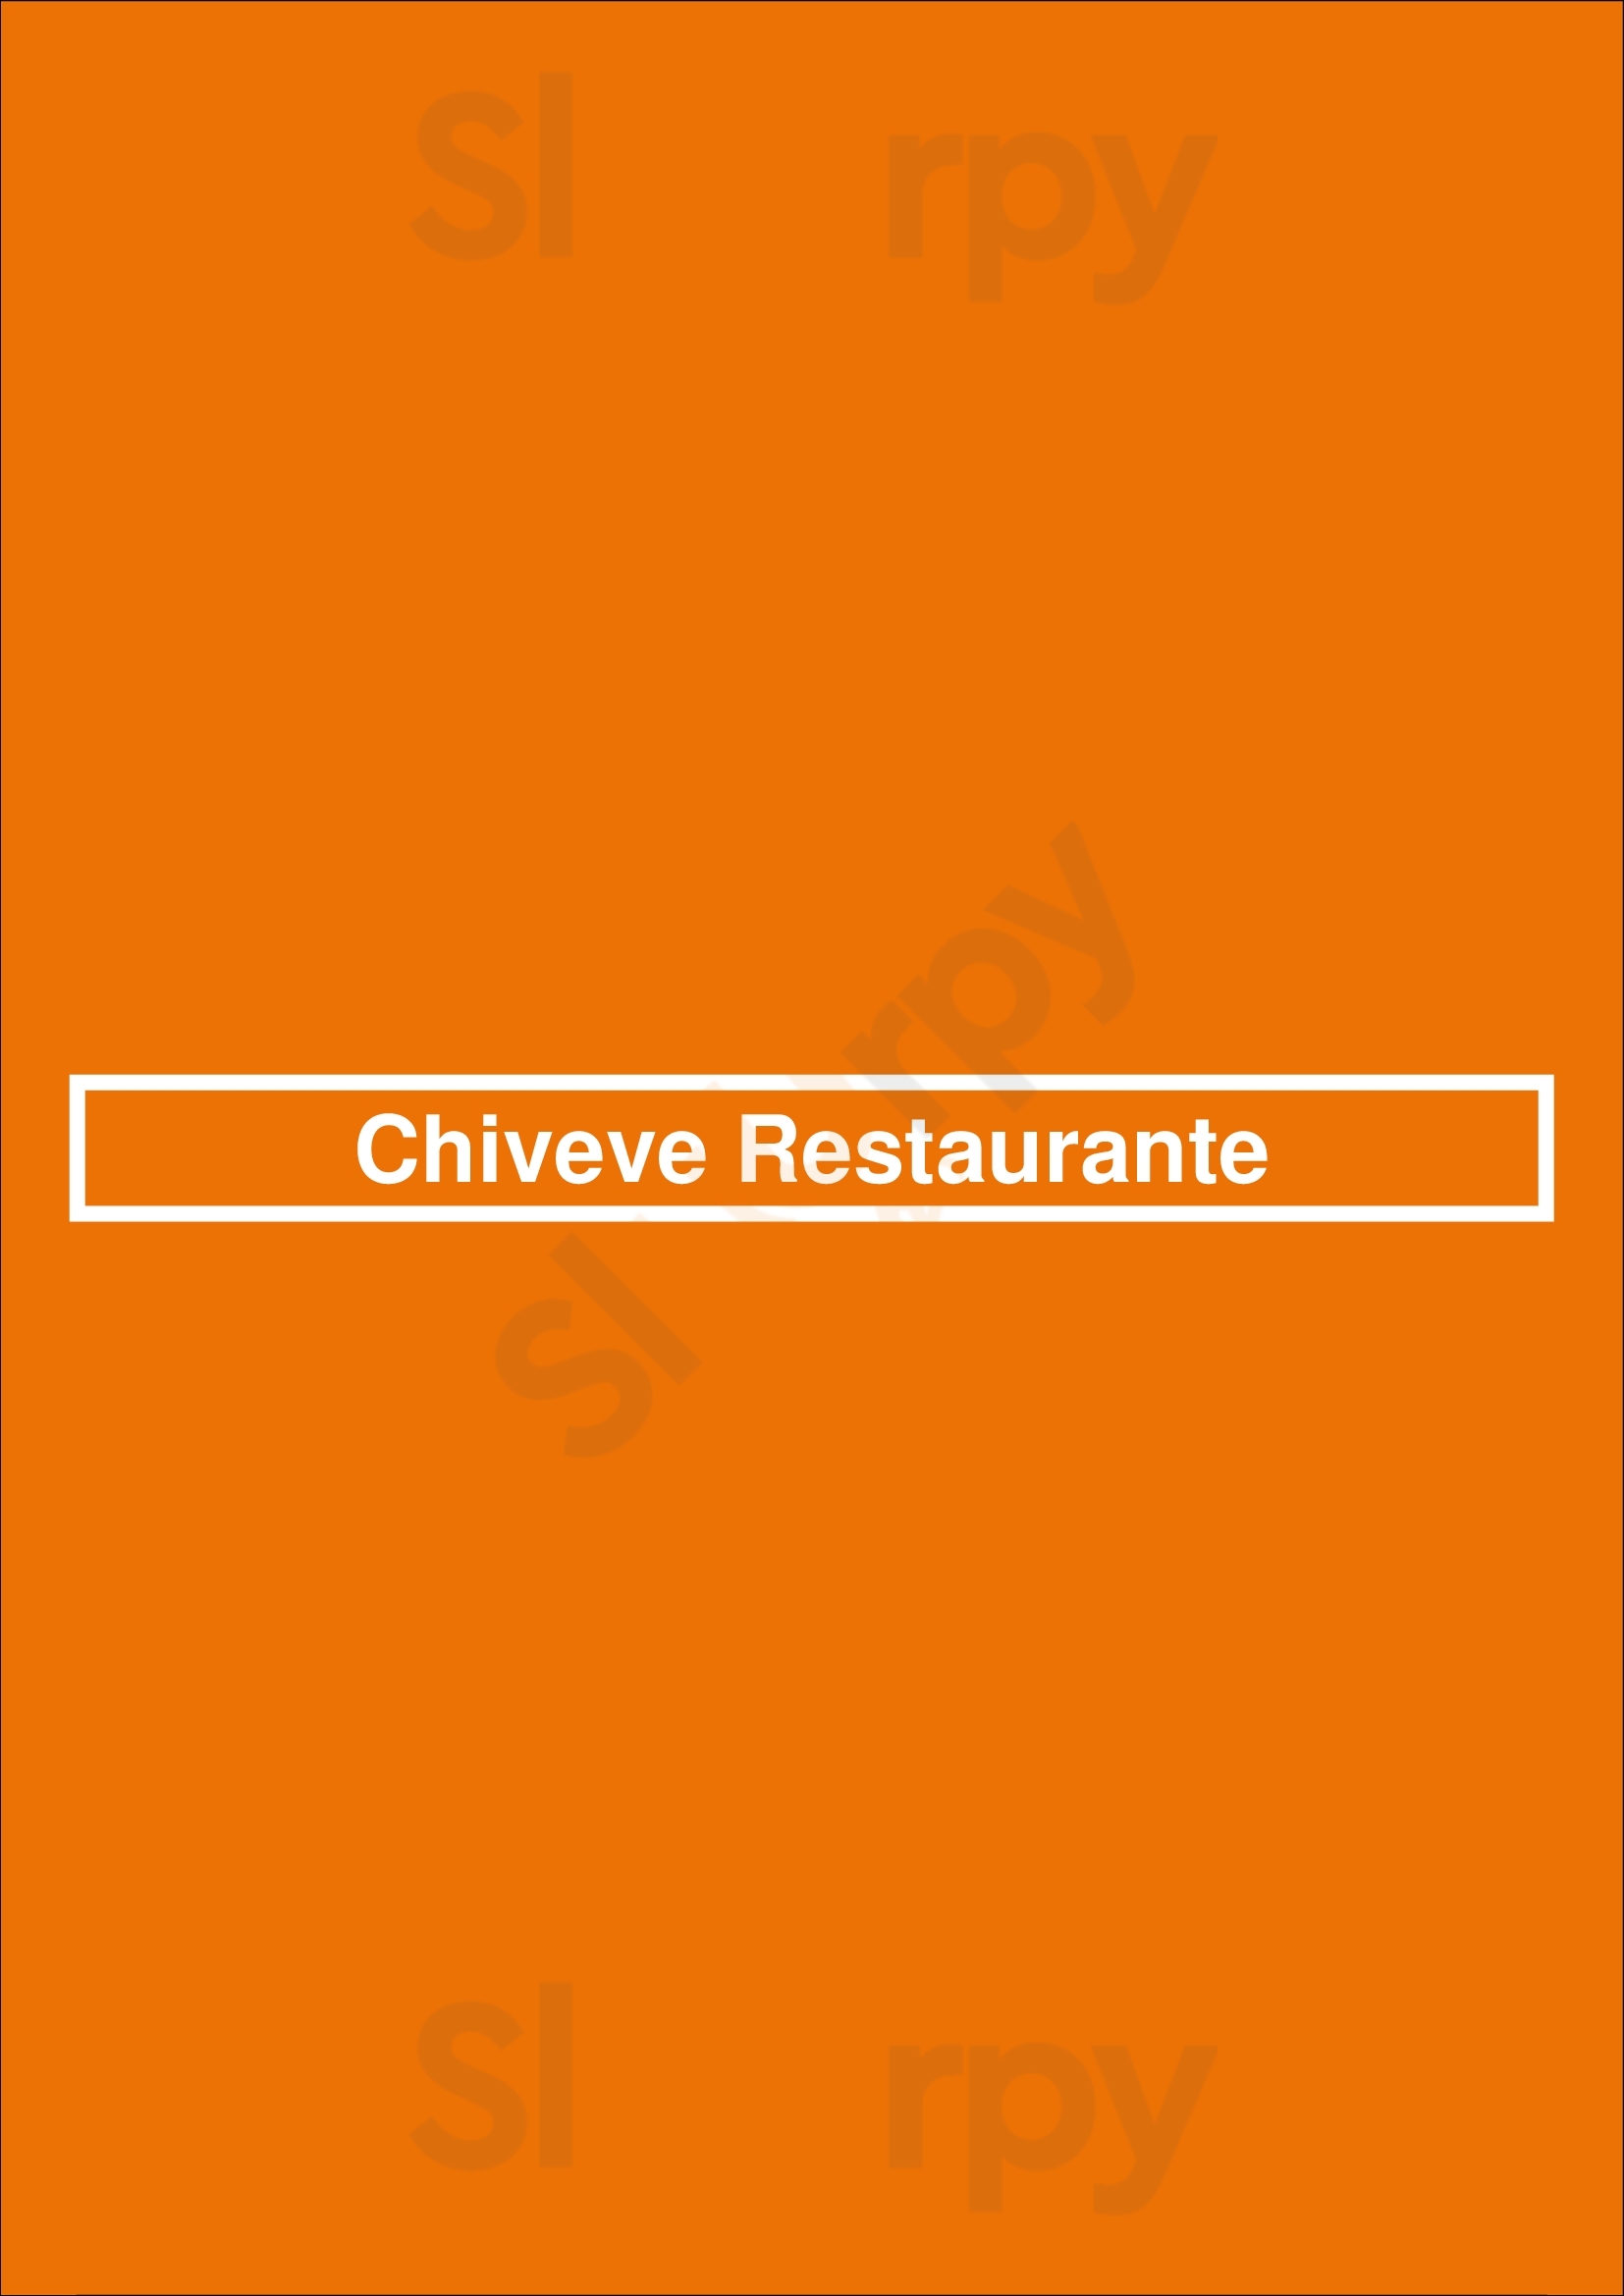 Chiveve Restaurante Lisboa Menu - 1